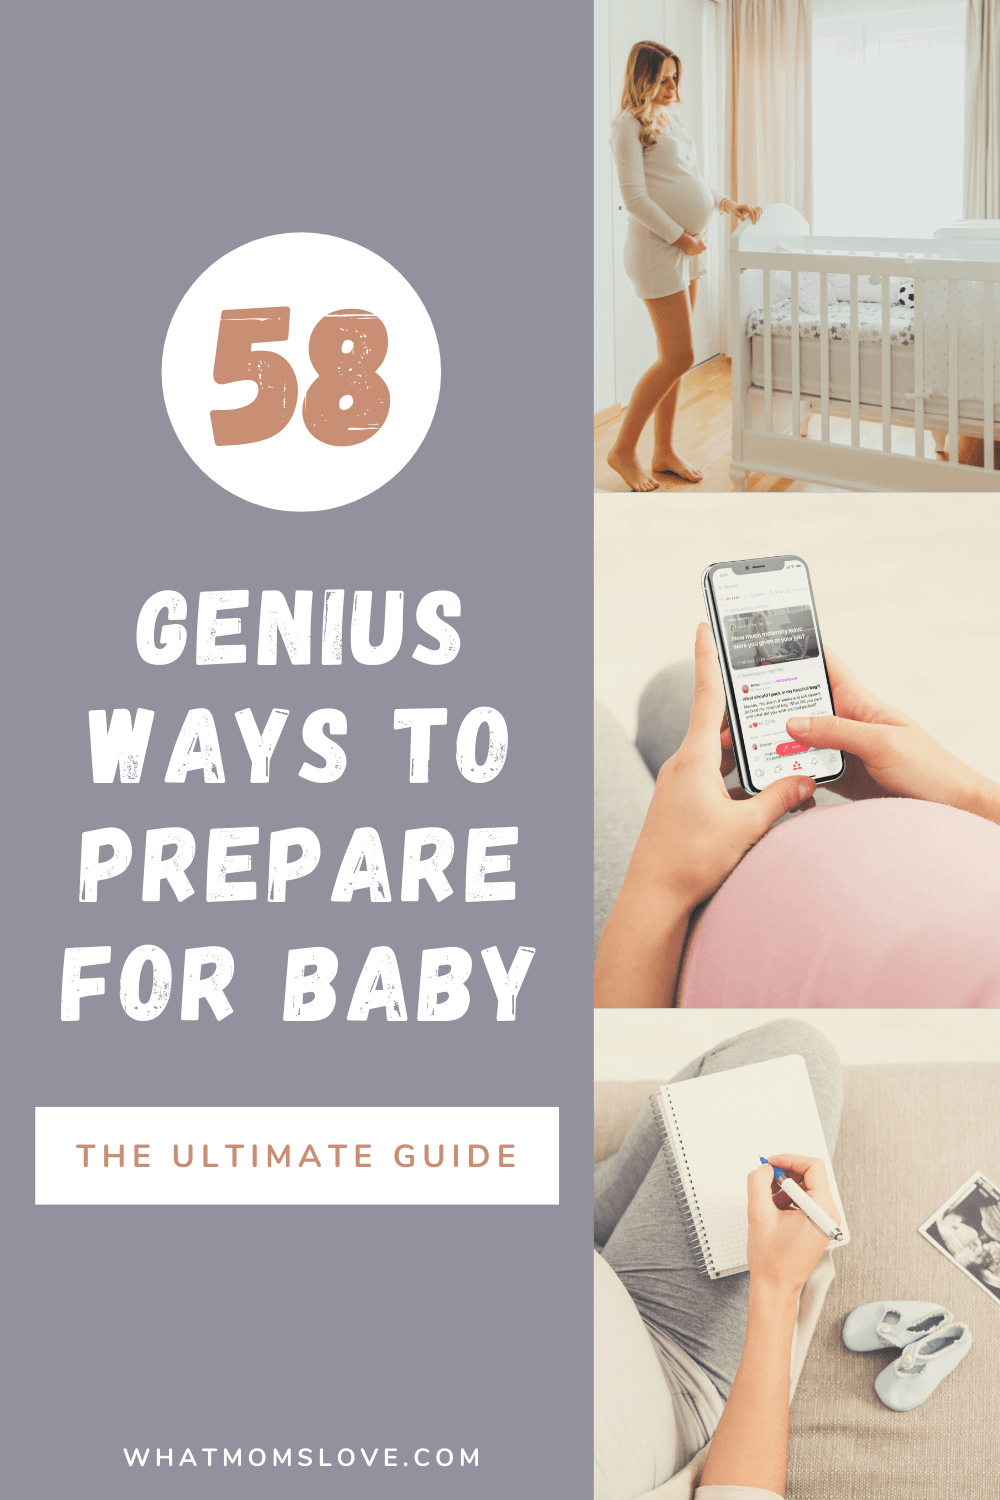 58 genius ways to prepare for baby graphic